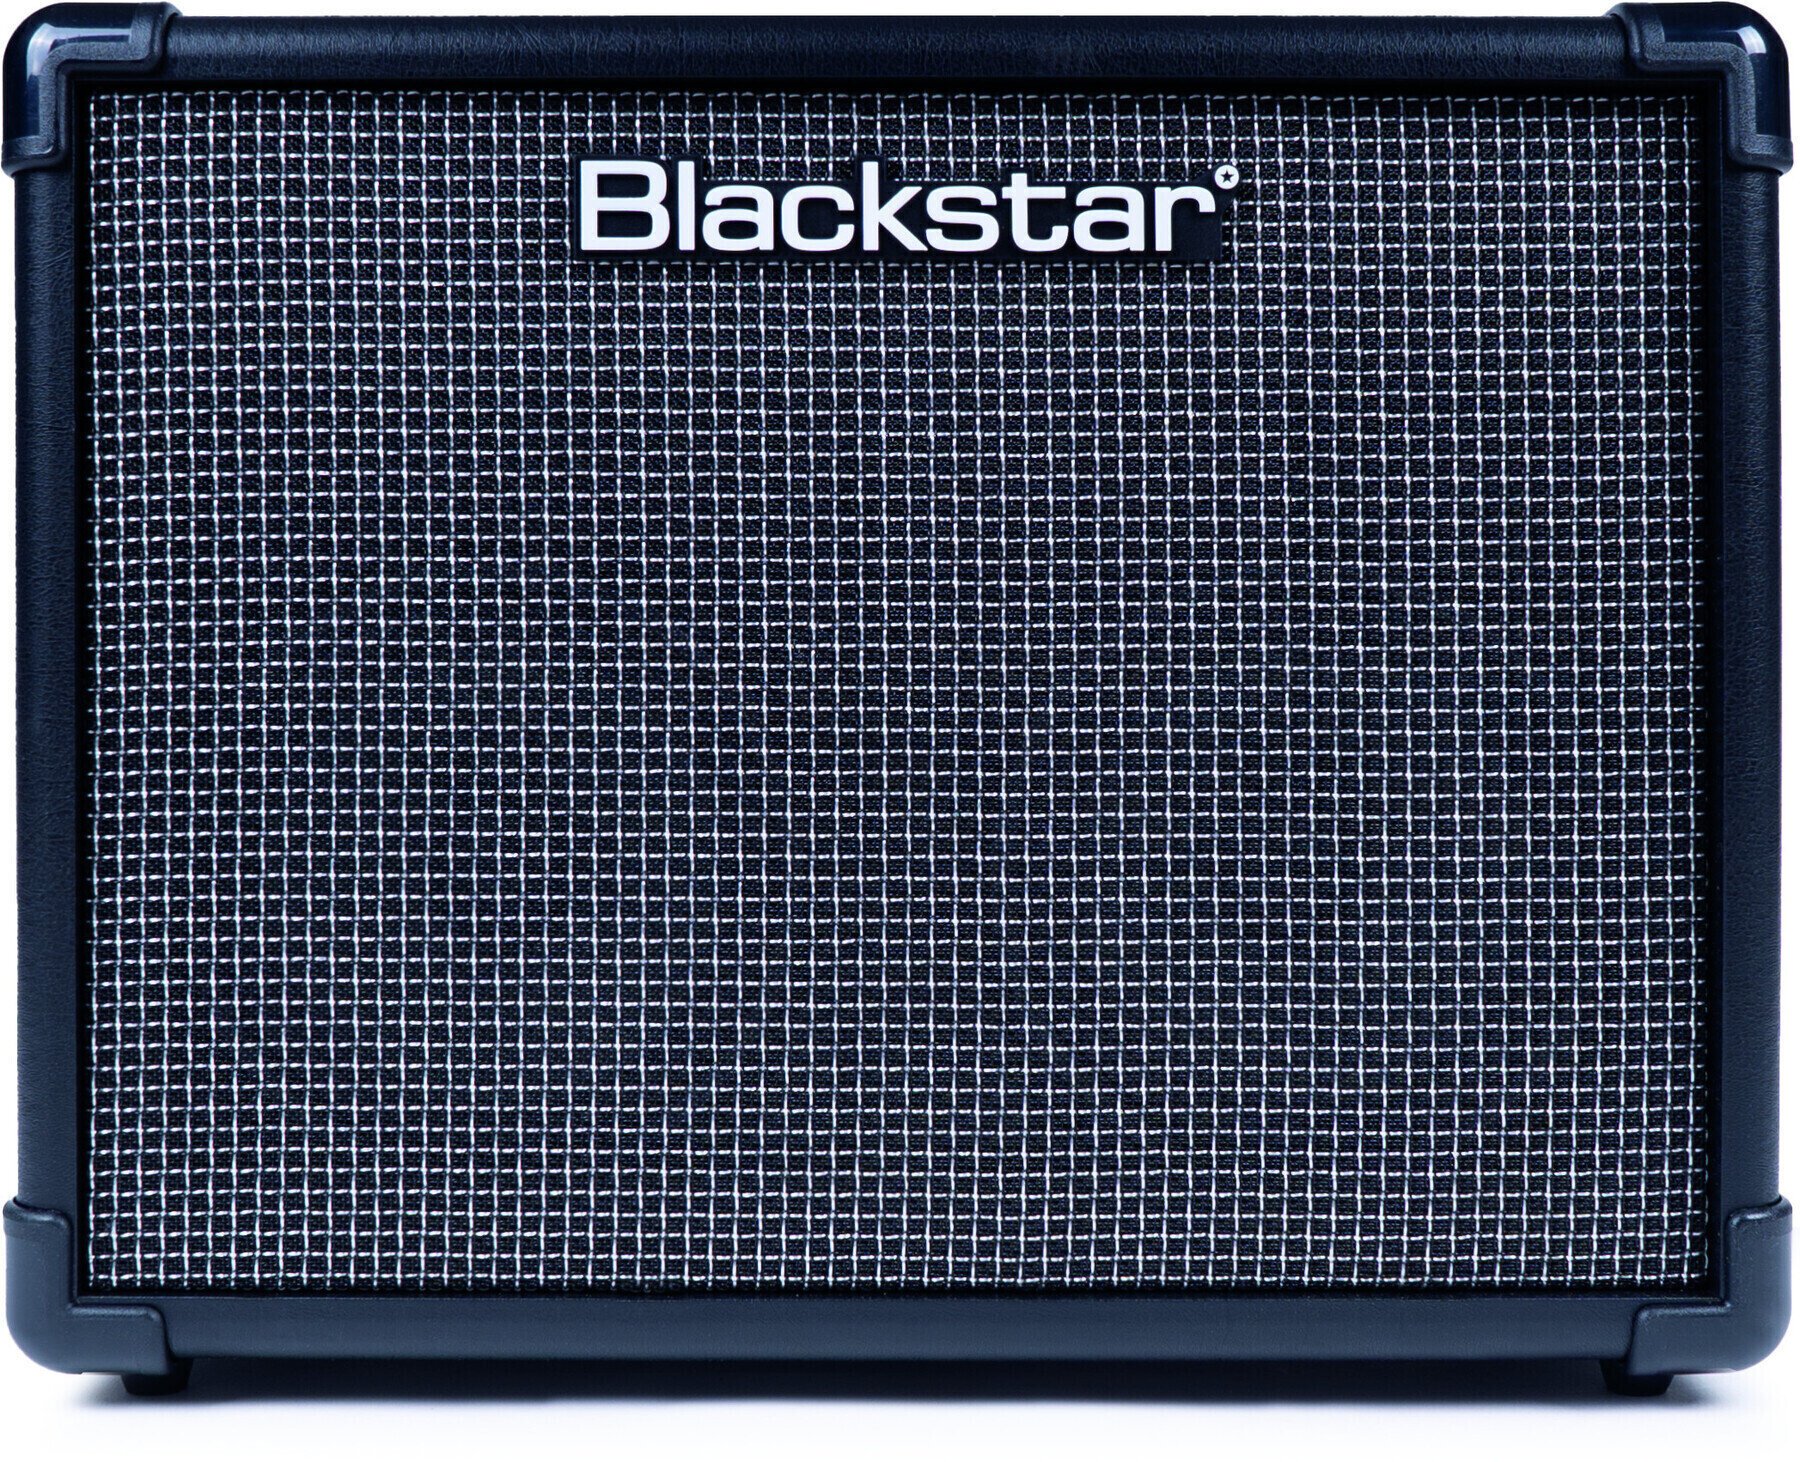 Modelling Gitarrencombo Blackstar ID:Core20 V3 (Neuwertig)